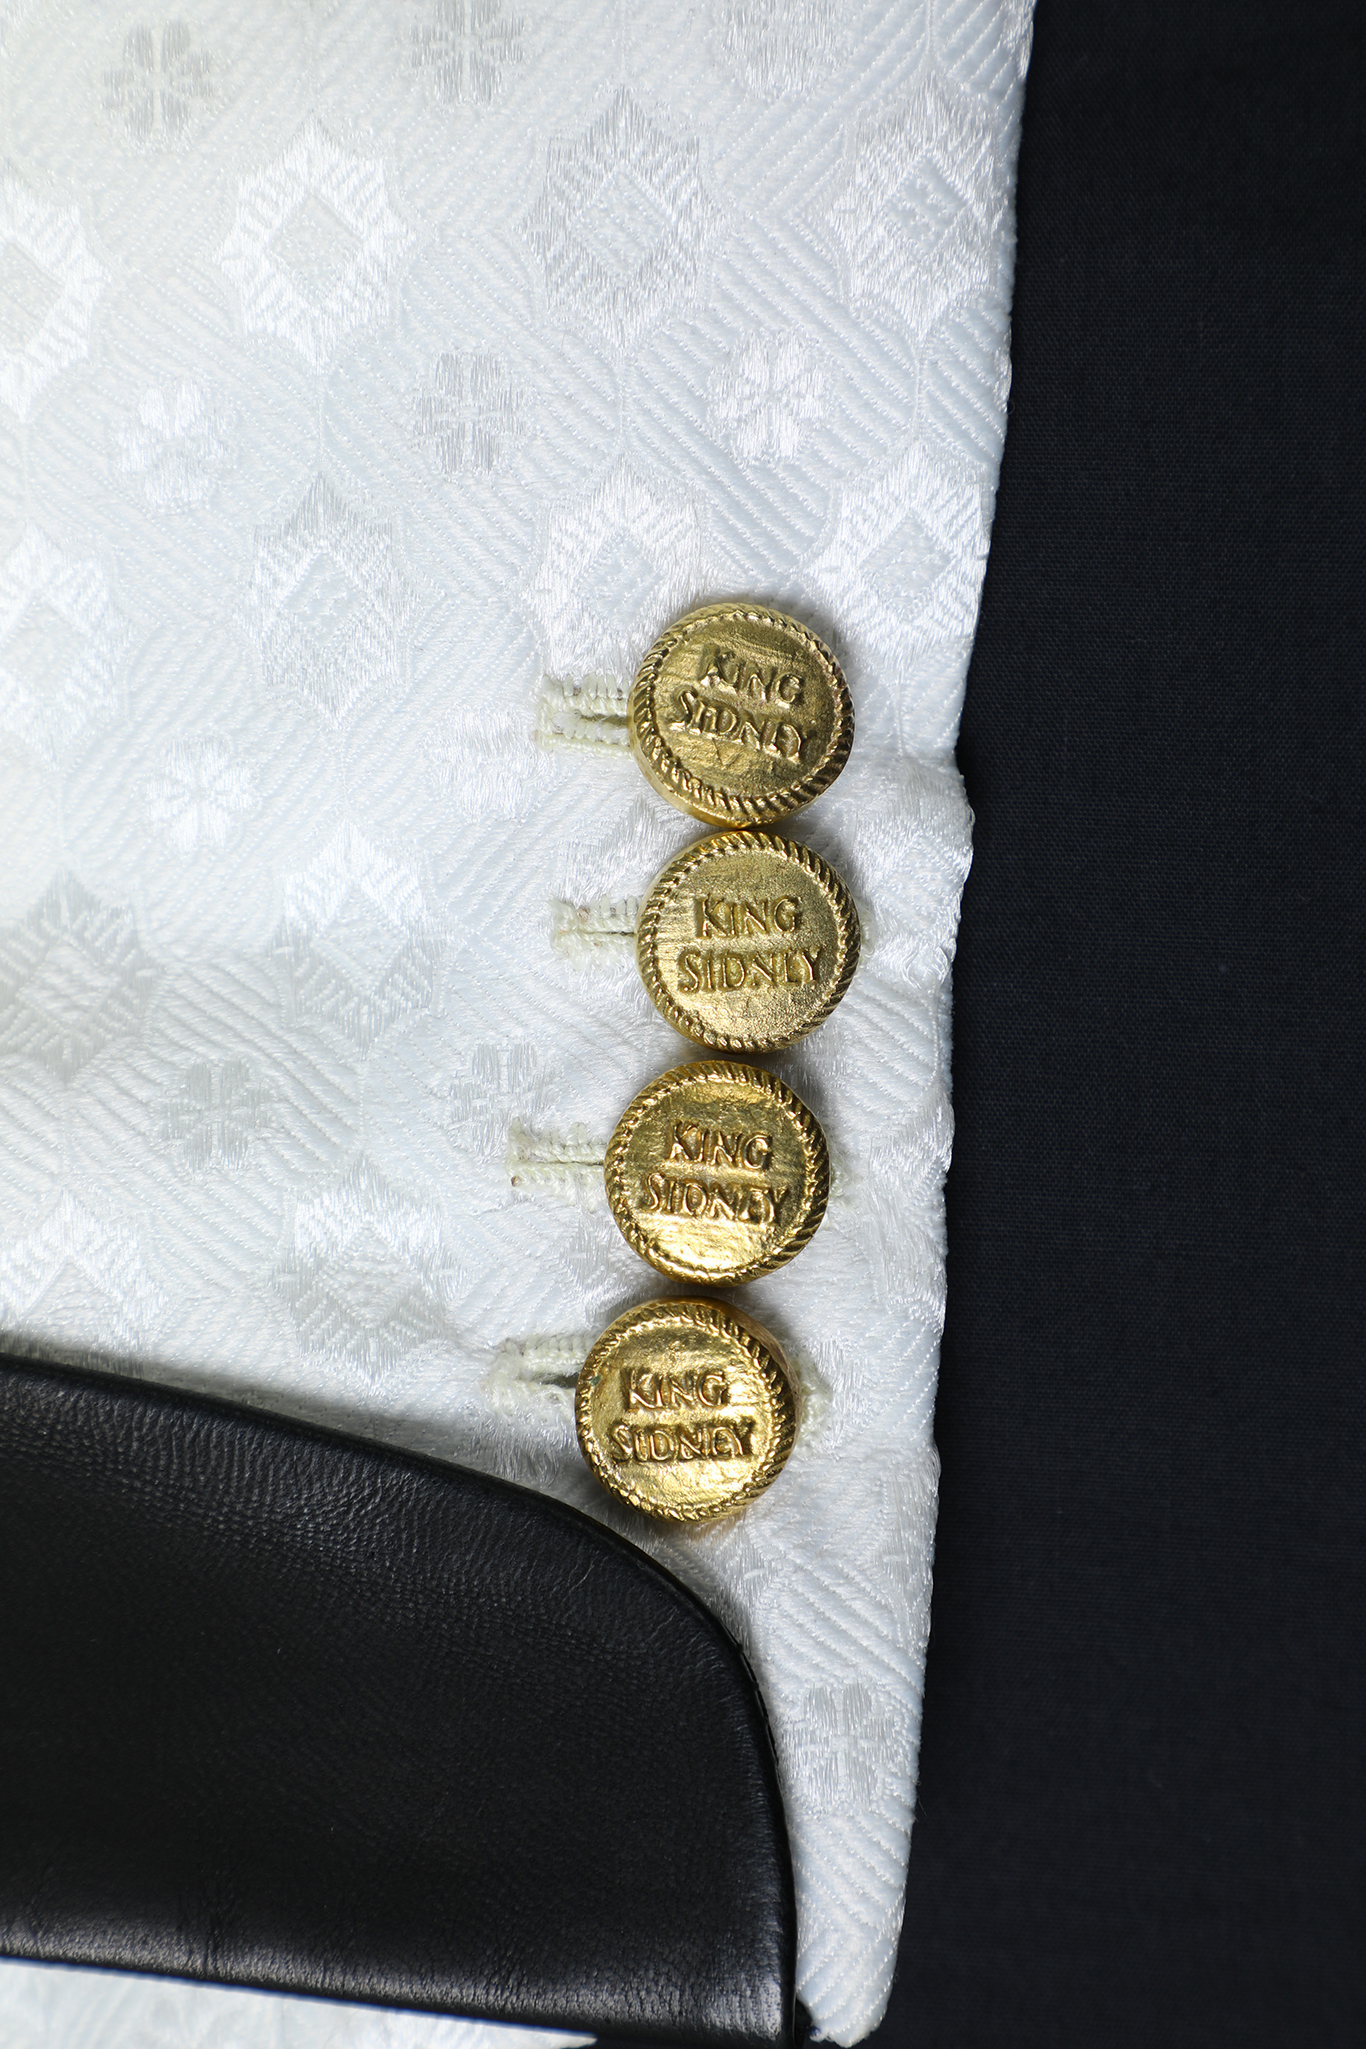 King Sidney wedding tuxedo buttons